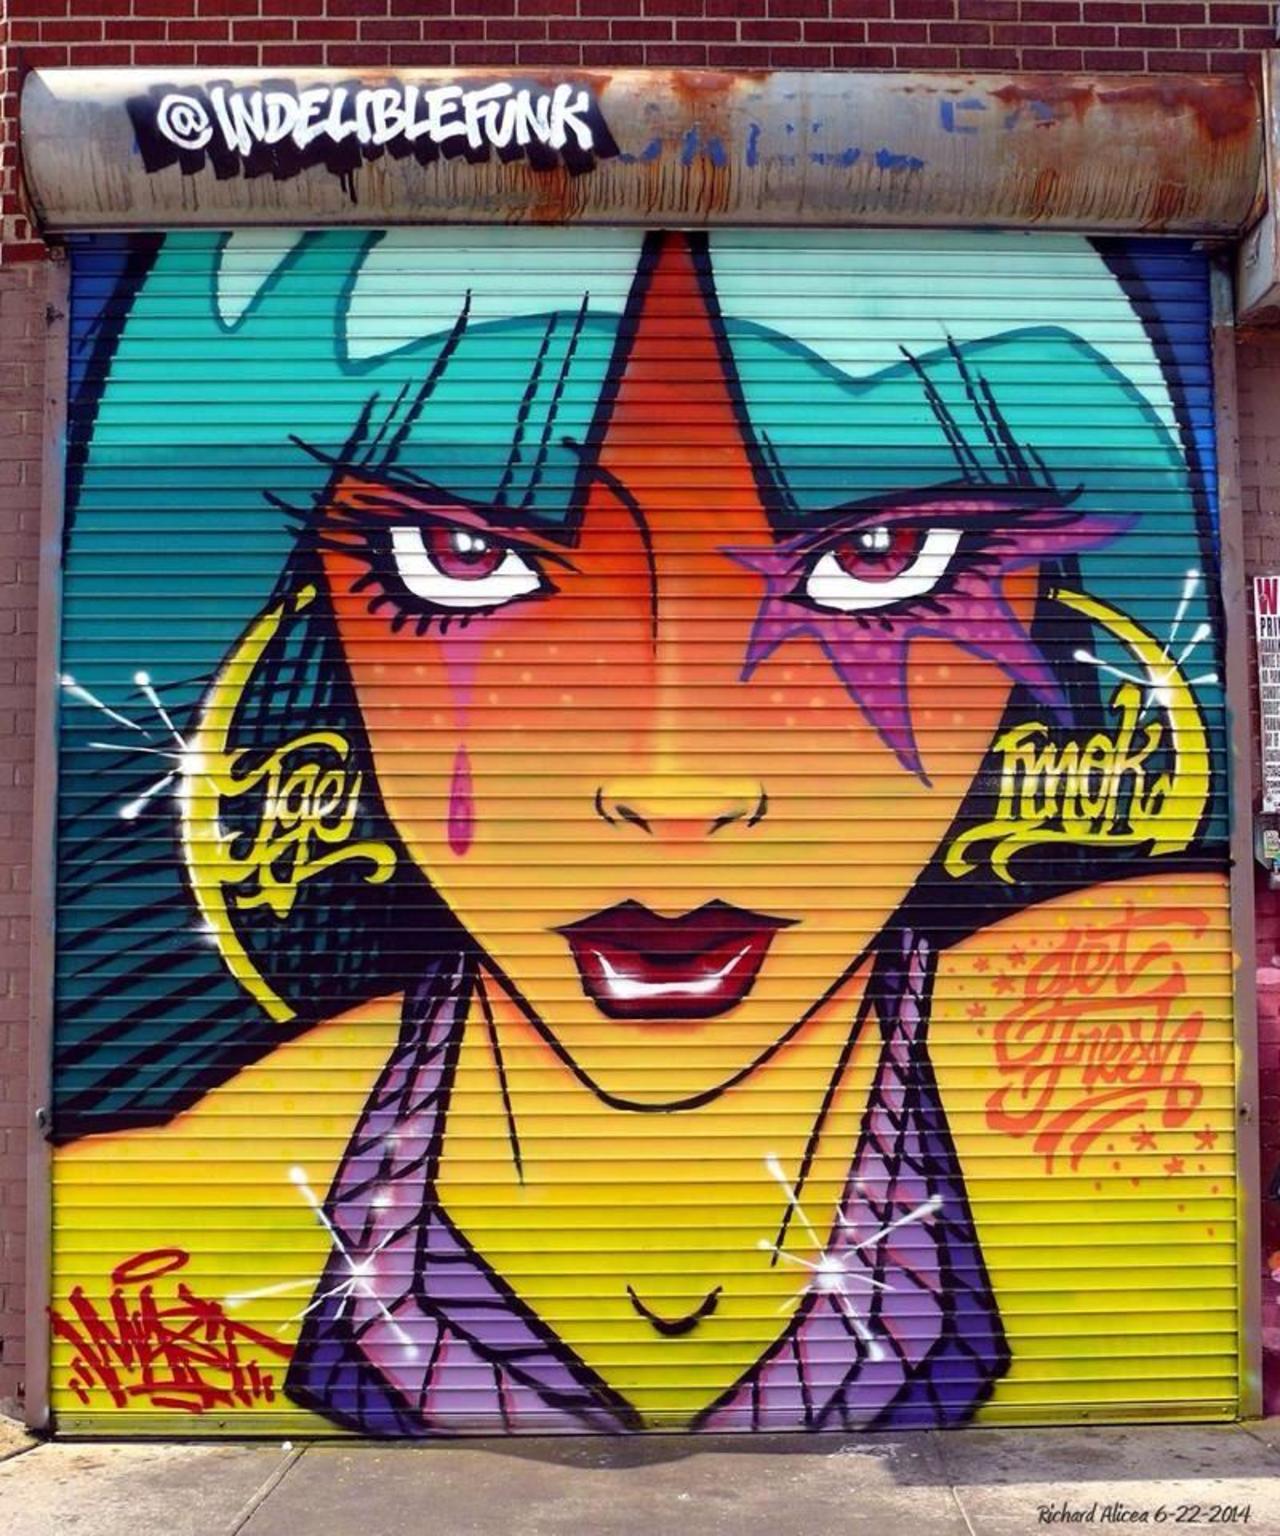 Artist 'Indeliblefunk' new Street Art work at Welling Court Queens, NY #art #mural #graffiti #streetart http://t.co/XHUyWUiczh